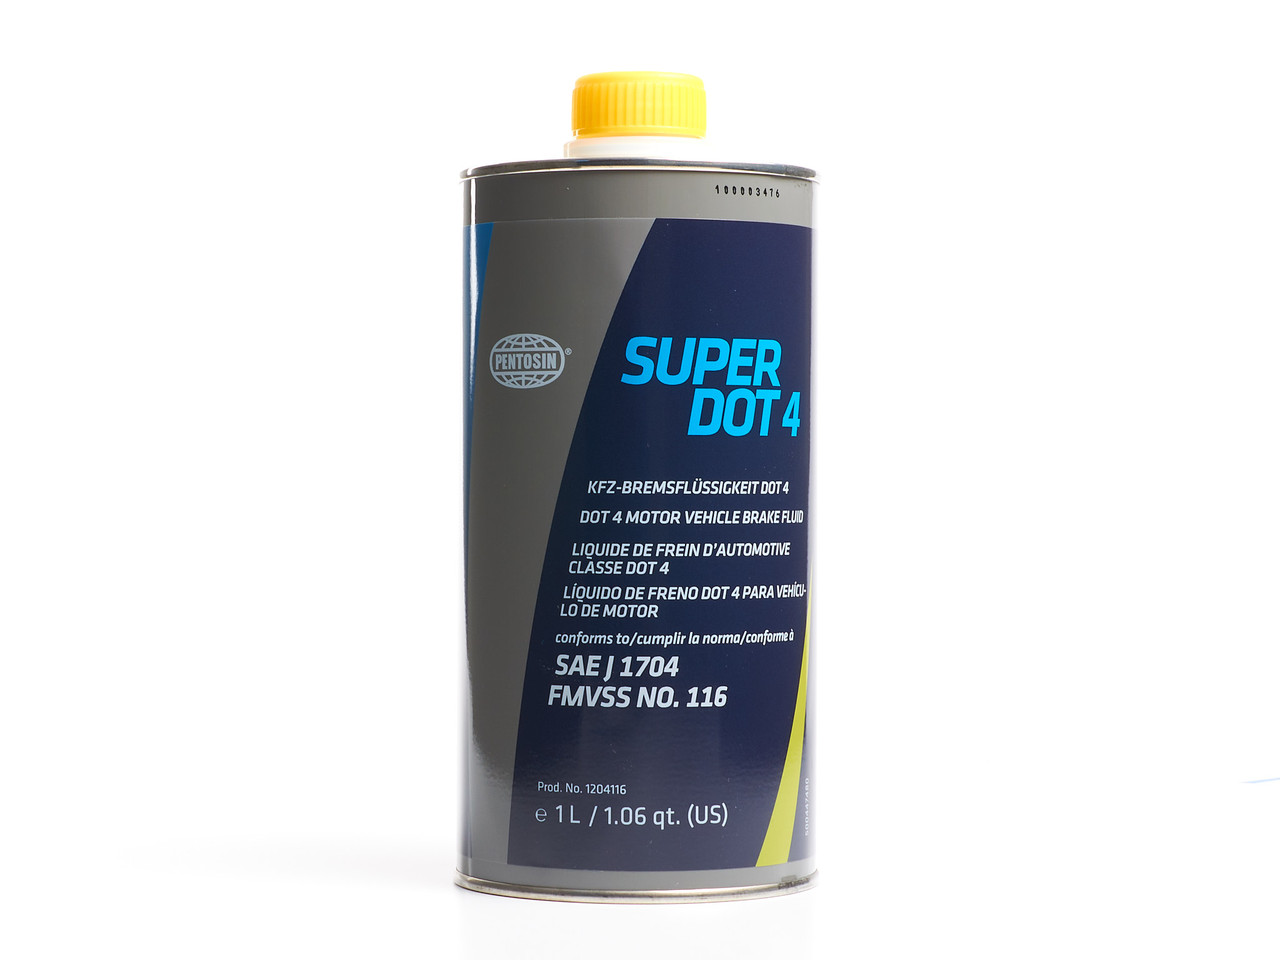 TT Stuff - PEN-1204116 - Pentosin - Brake Fluid - Super DOT4 - 1 Liter